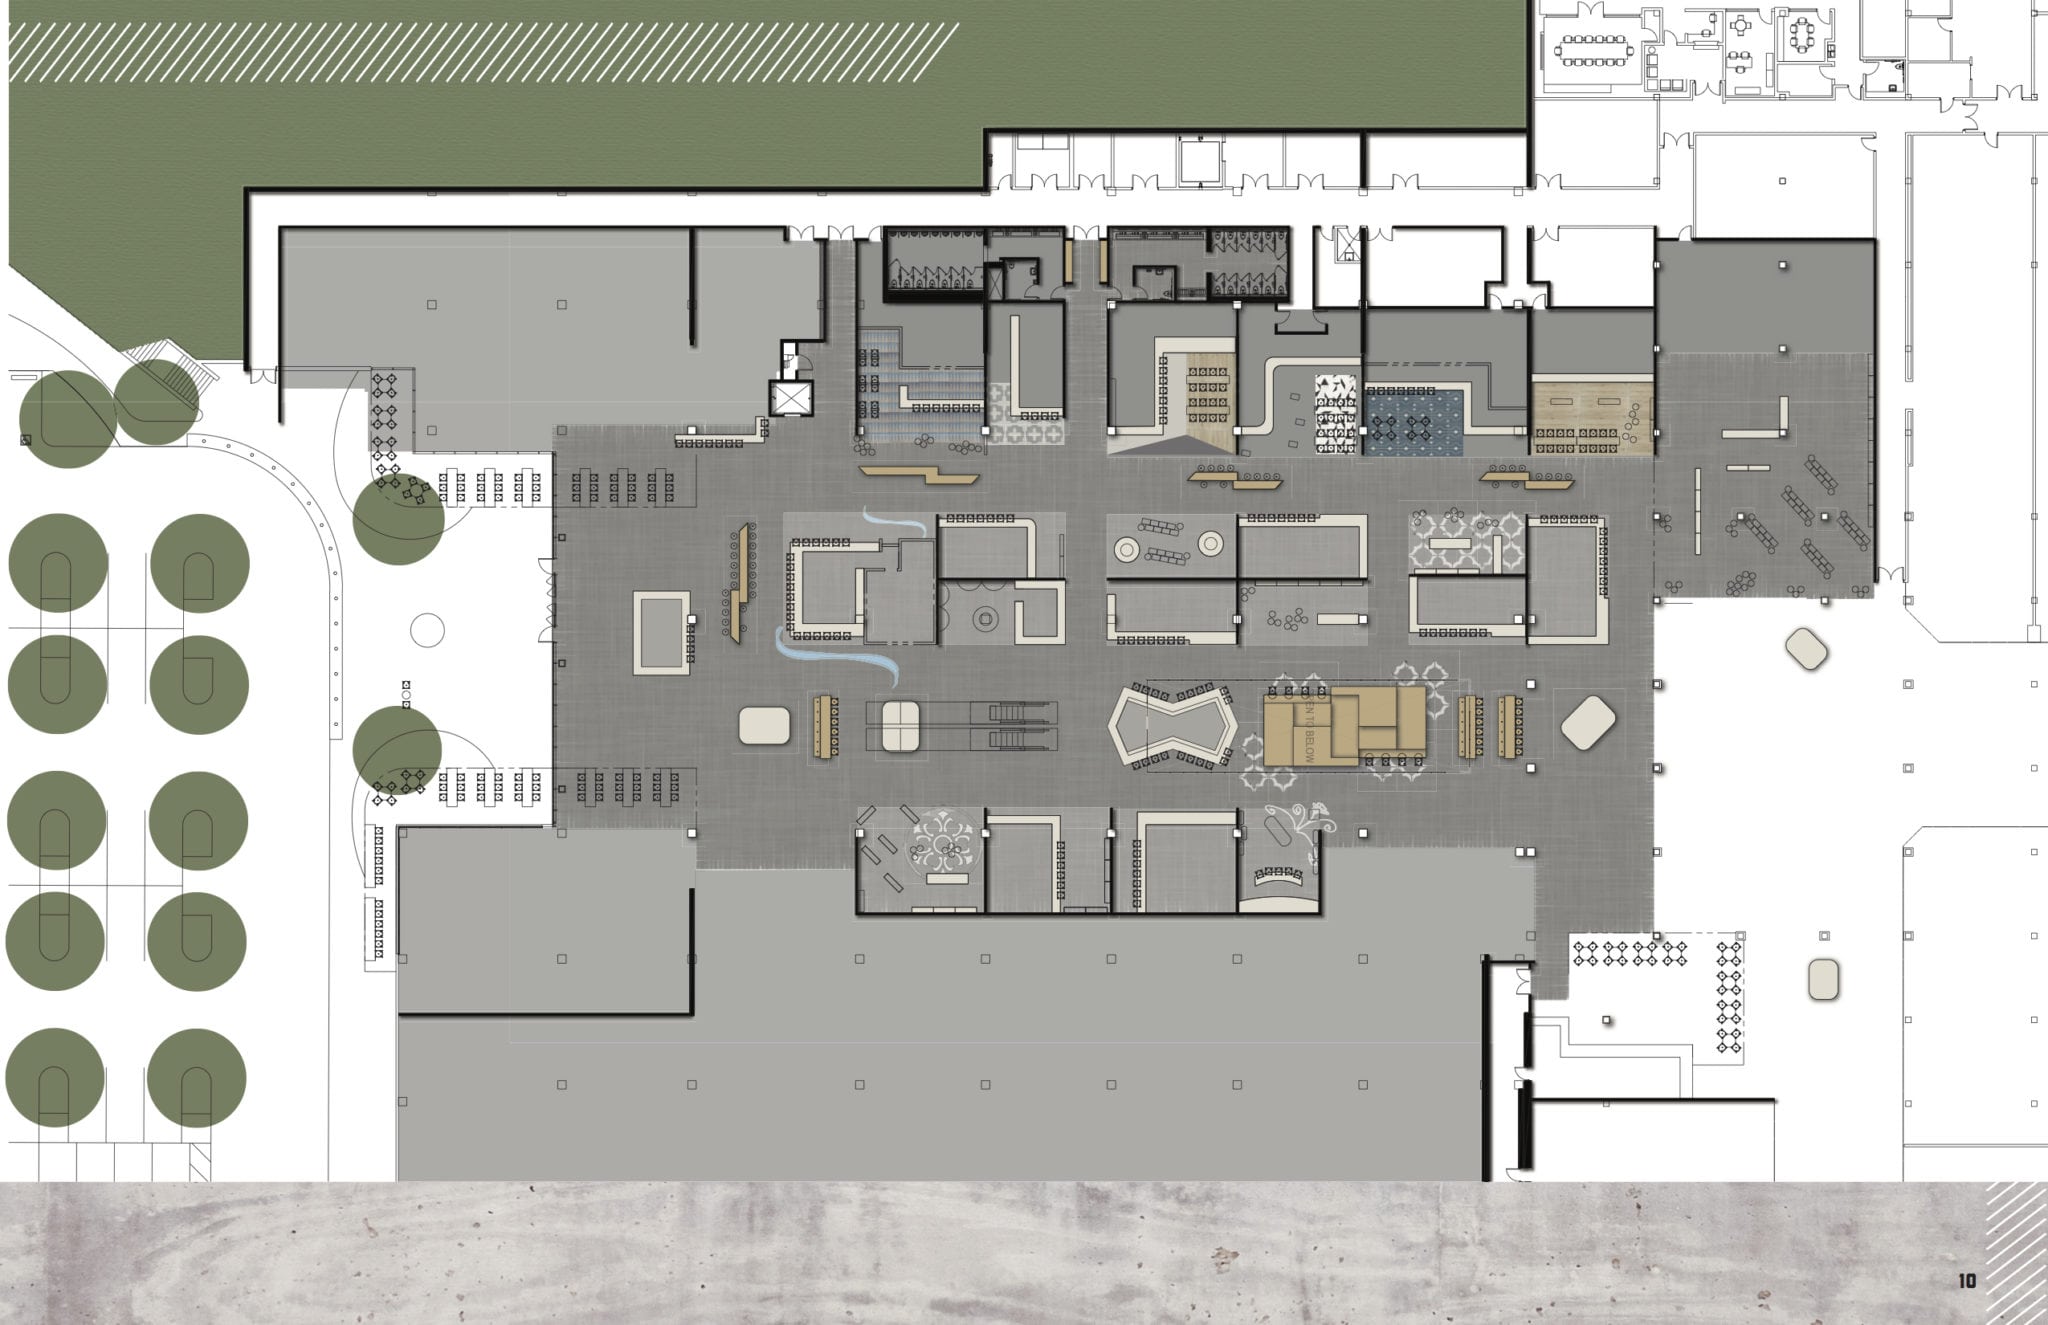 floor plan westfield topanga mall map